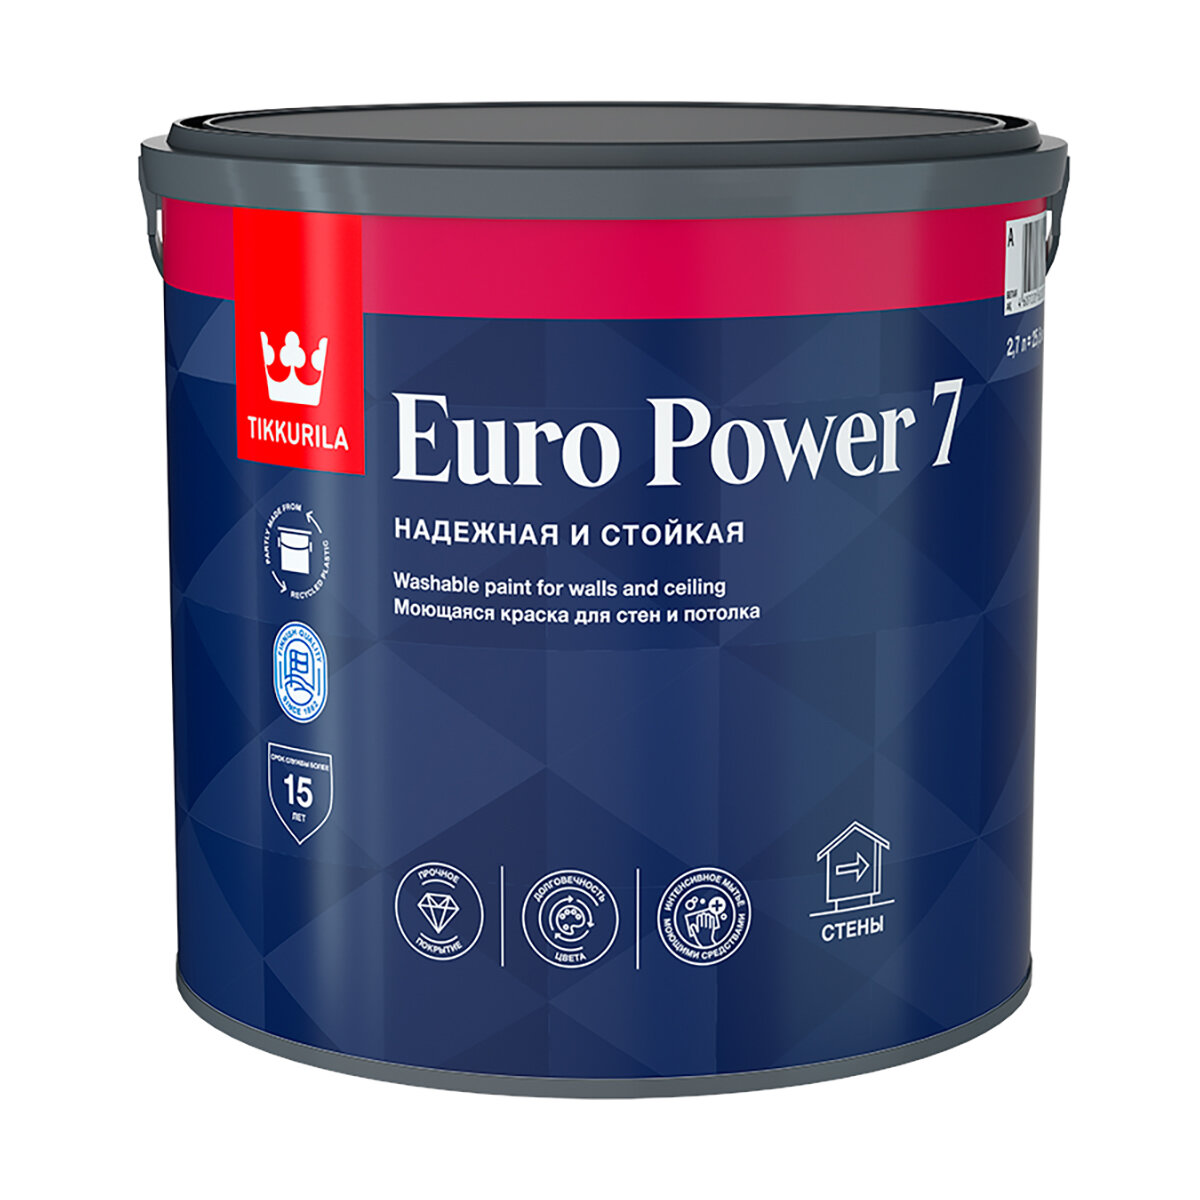       Euro Power-7 (-7) TIKKURILA 2,7  ( )